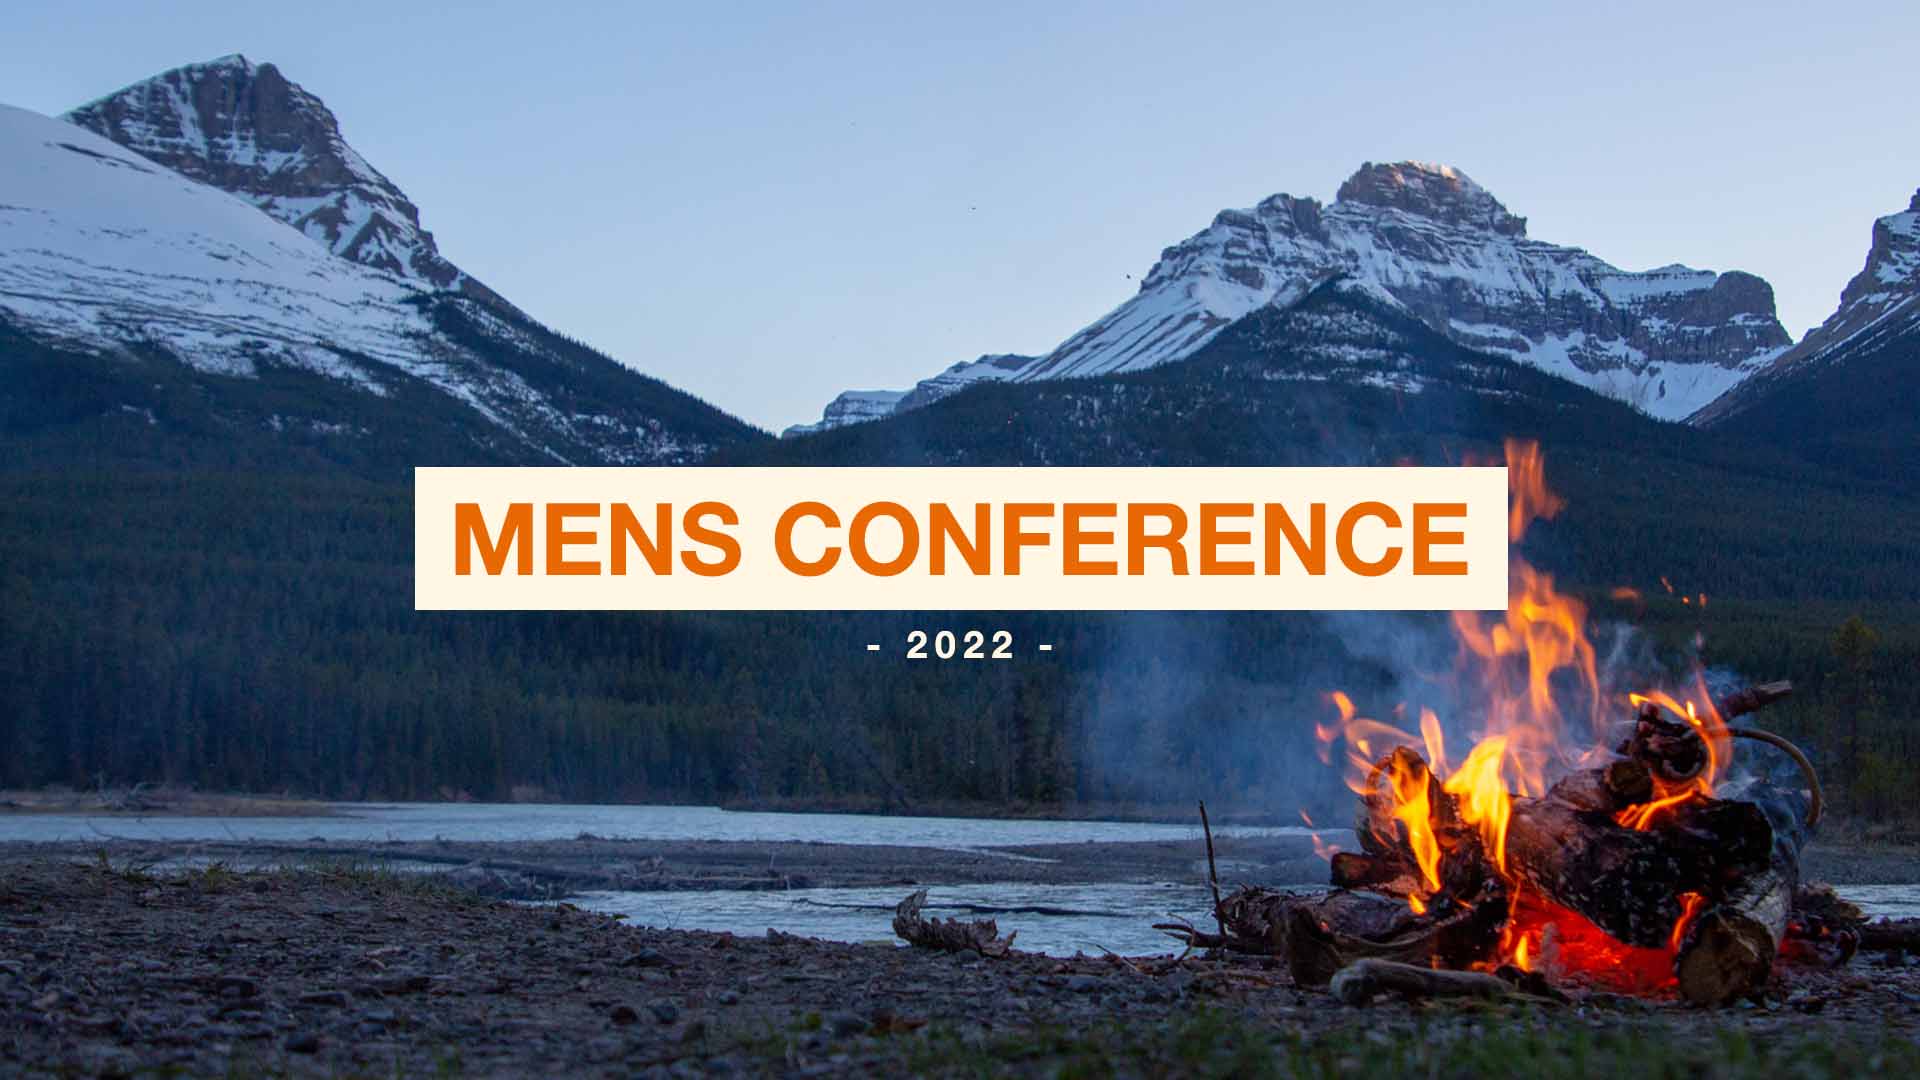 Men's Conference 2022